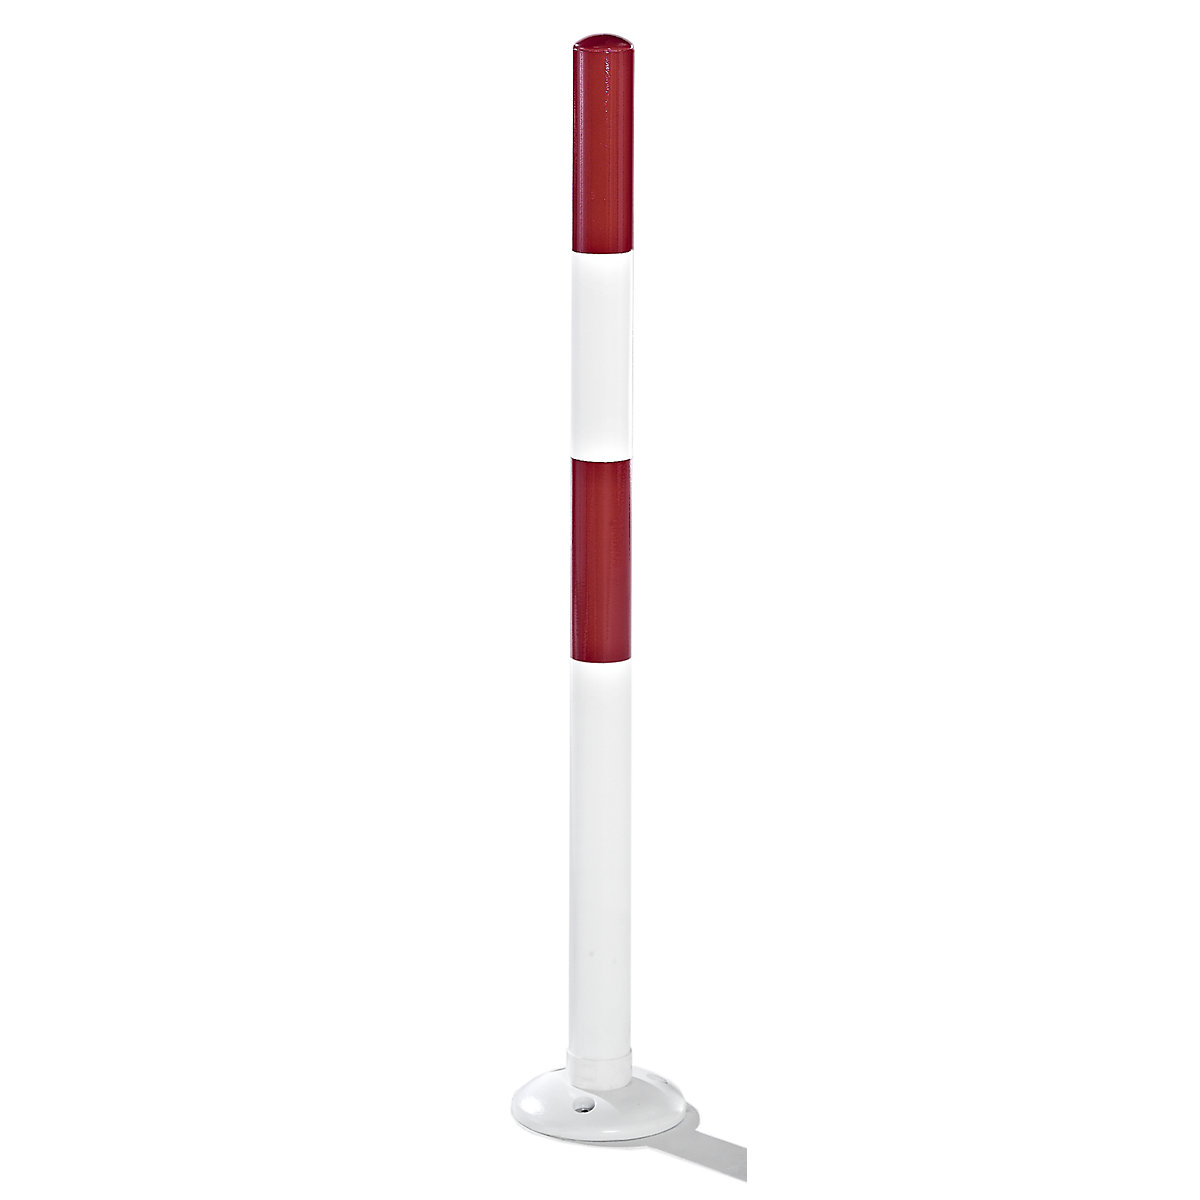 Poste barrera de tubo redondo de acero, blanco / rojo, para atornillar, Ø 76 mm-3